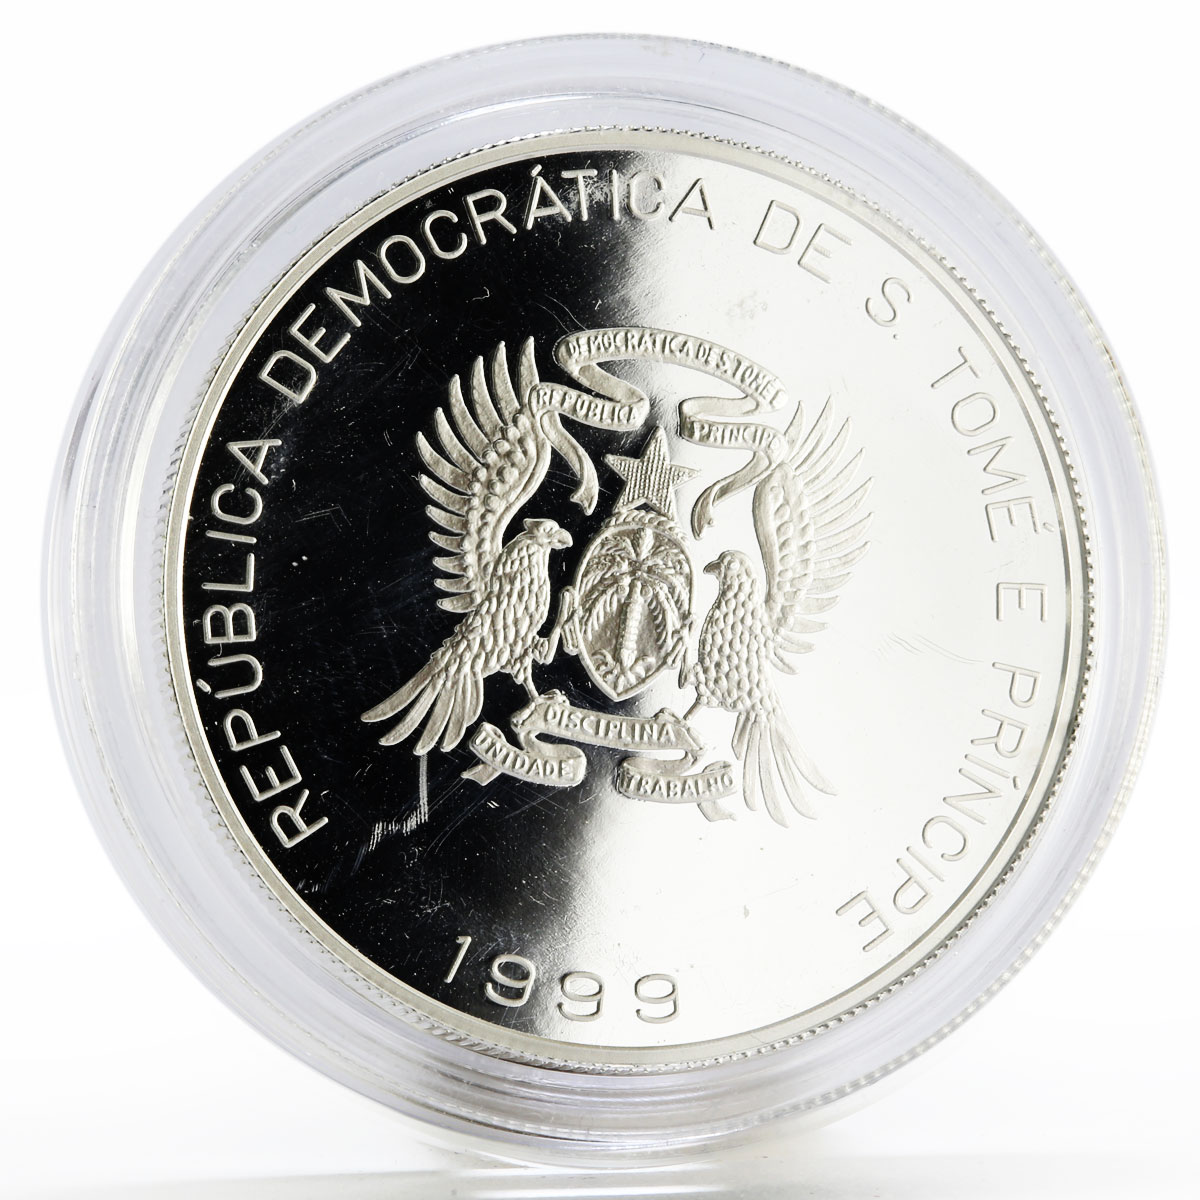 Sao Tome and Principe 2000 dobras Year of the Euro 1 Escudo bimetal coin 1999